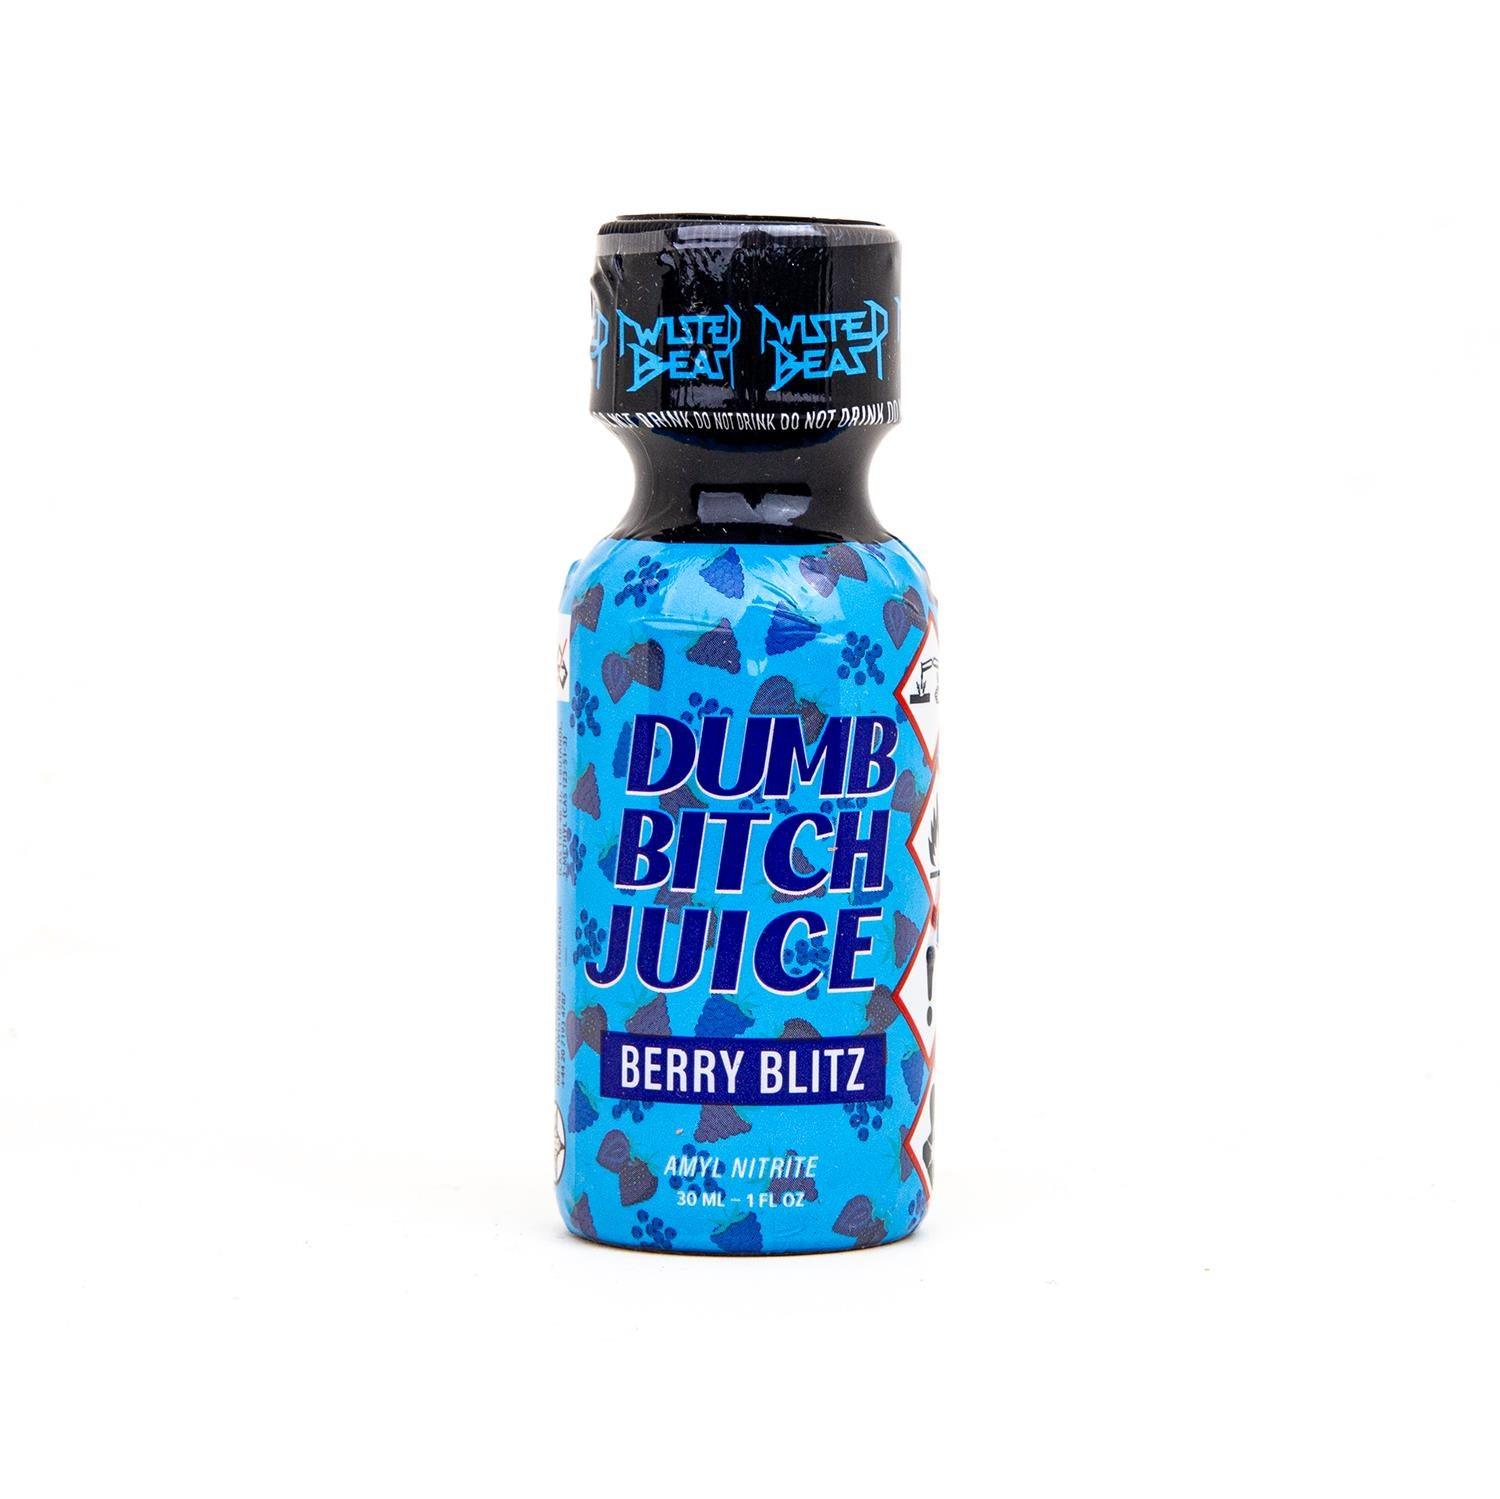 Dumb Bitch Juice, Berry Blitz, 30ml by Twisted Beast